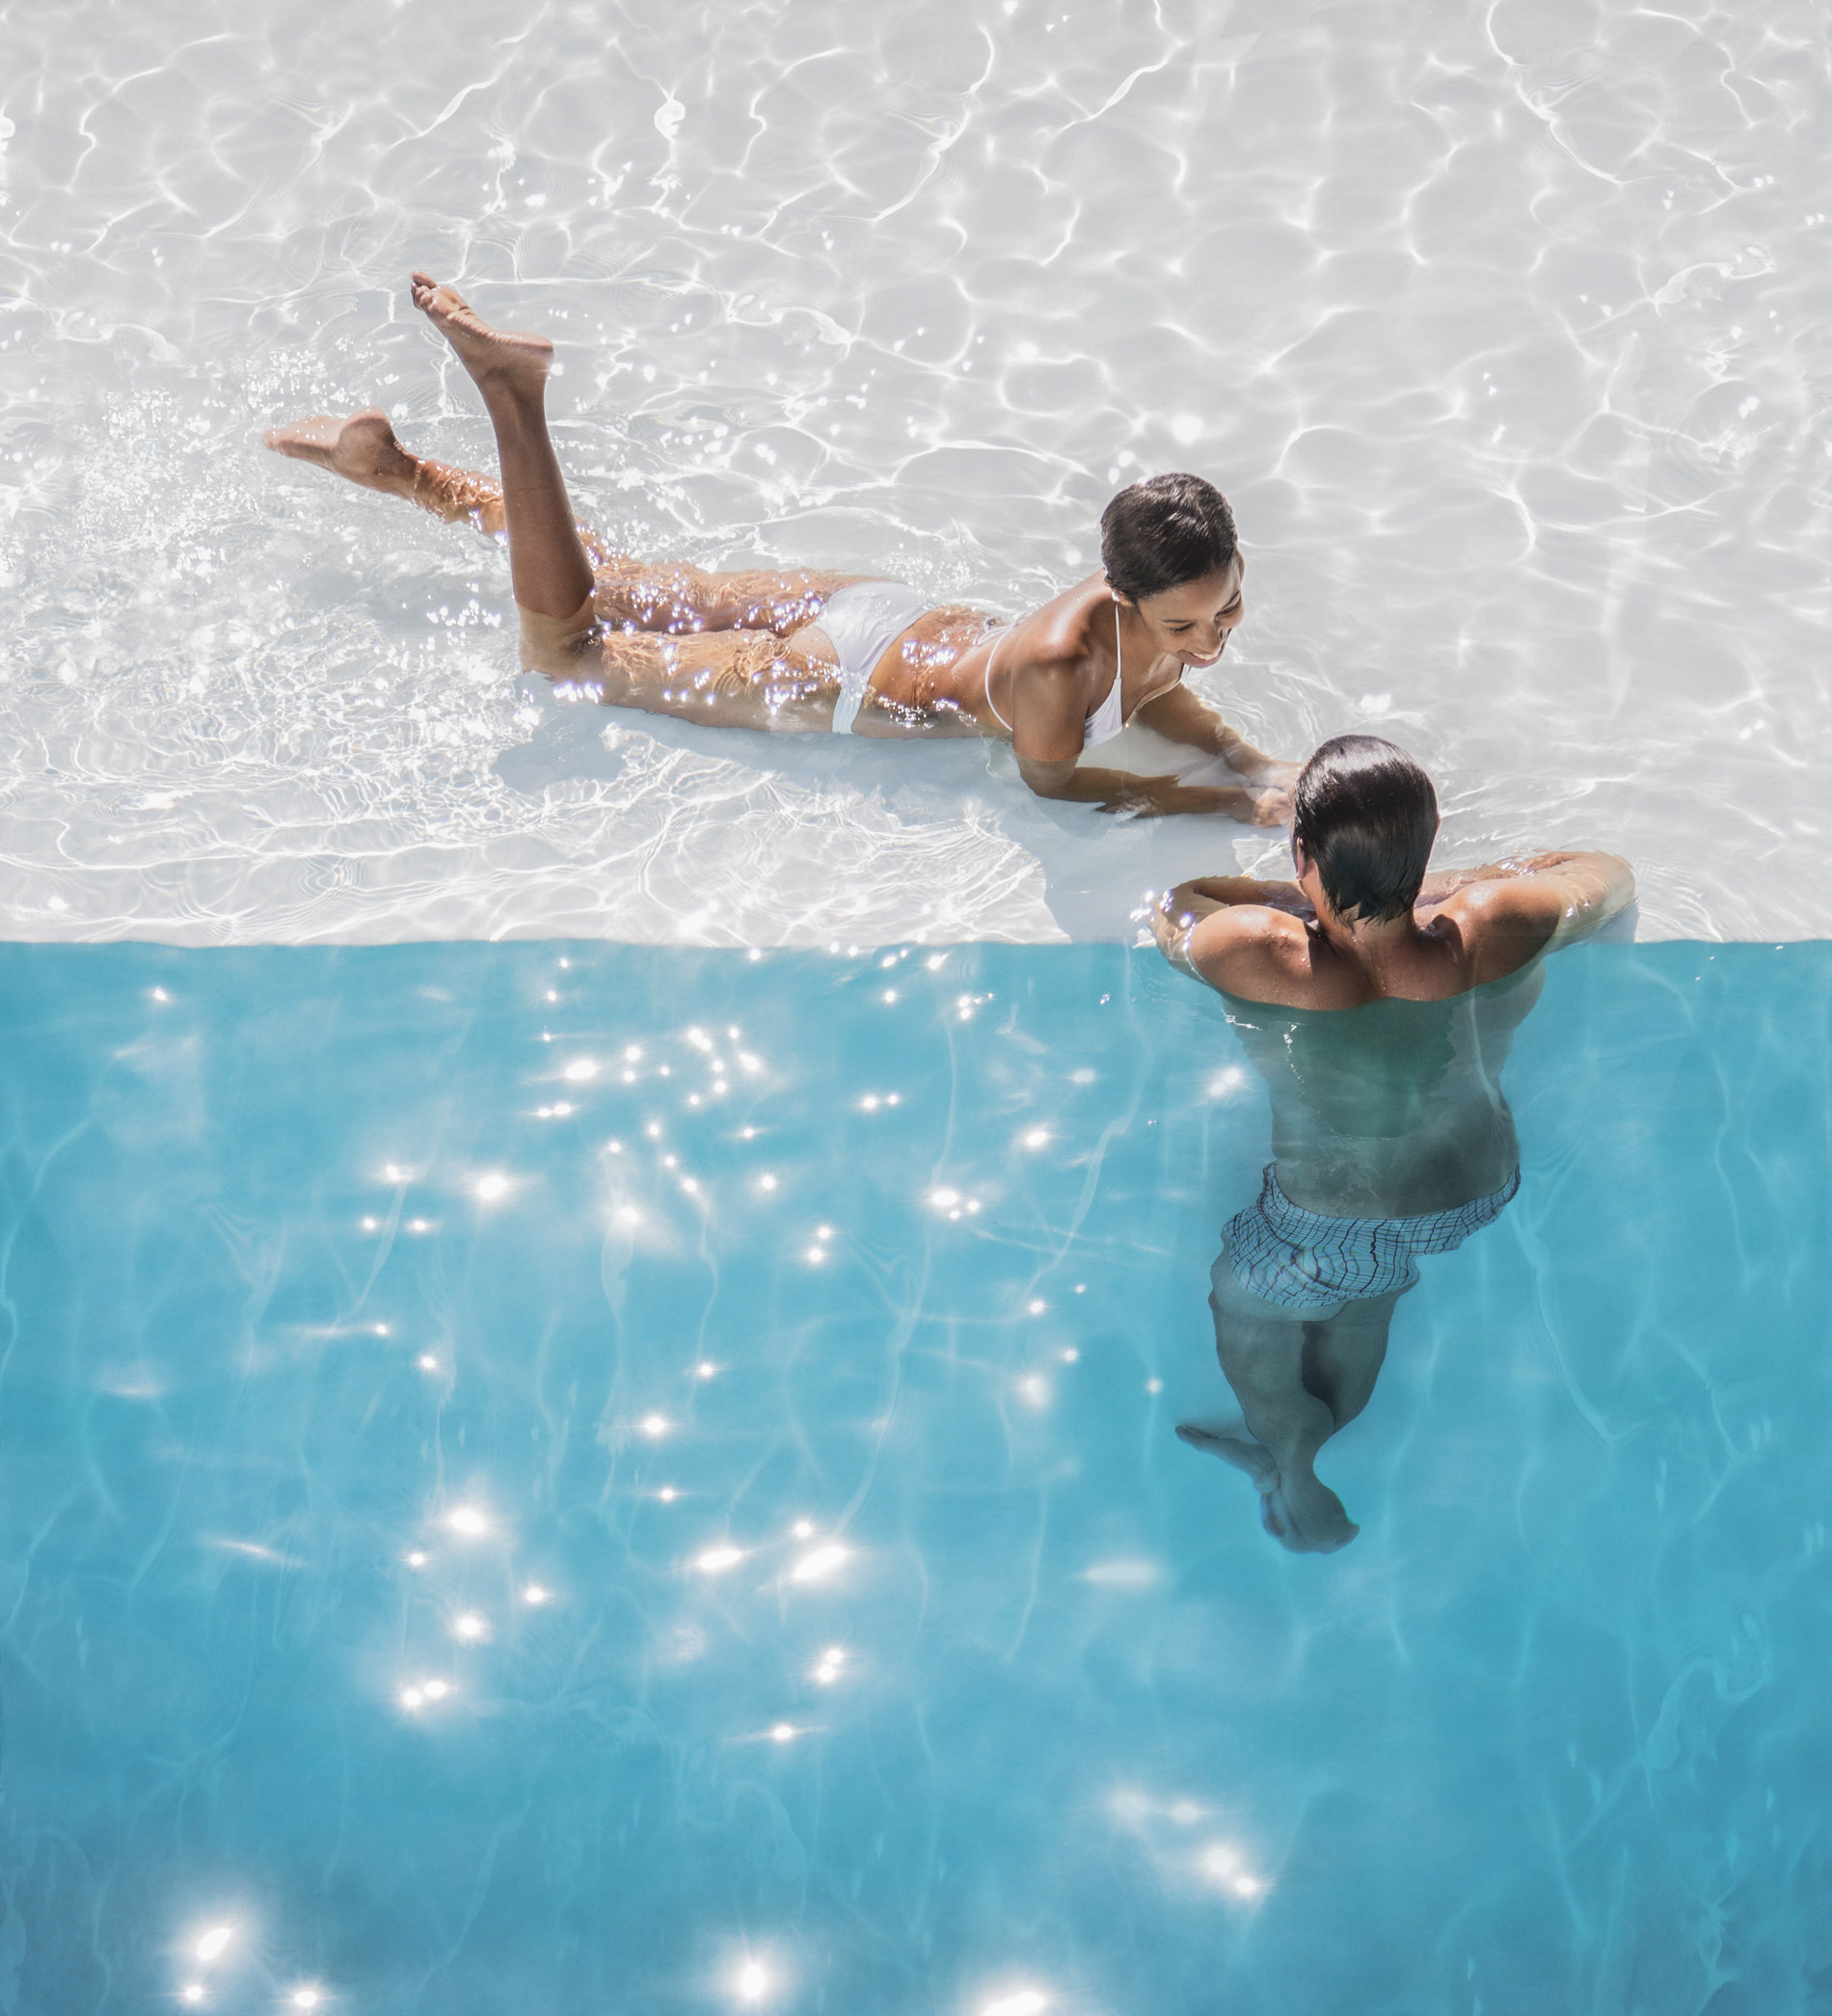 Jong koppel in een Bluefino overloopzwembad